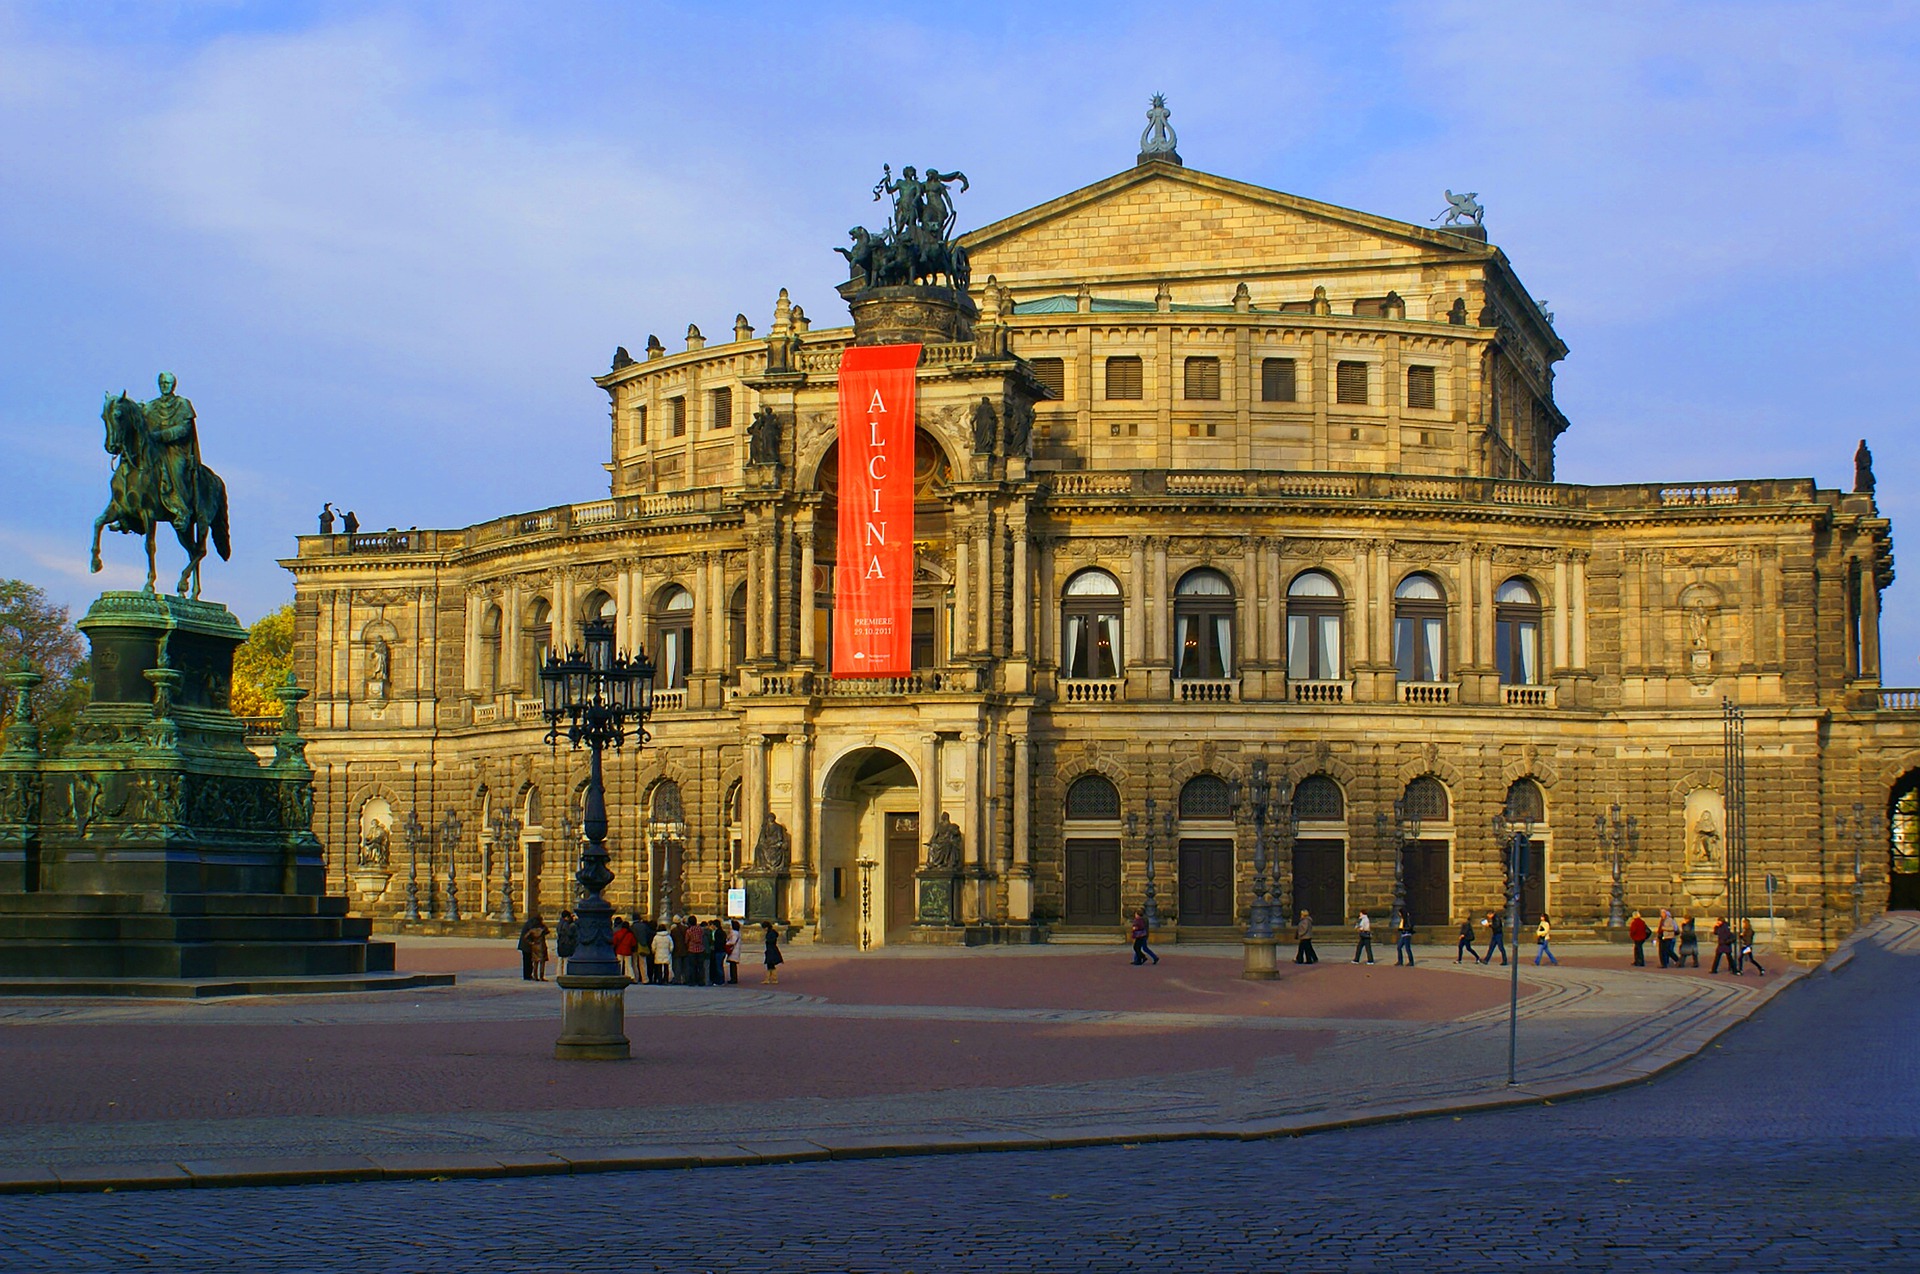 Dresden Semper pixa opera house g8f45ef2b1 1920